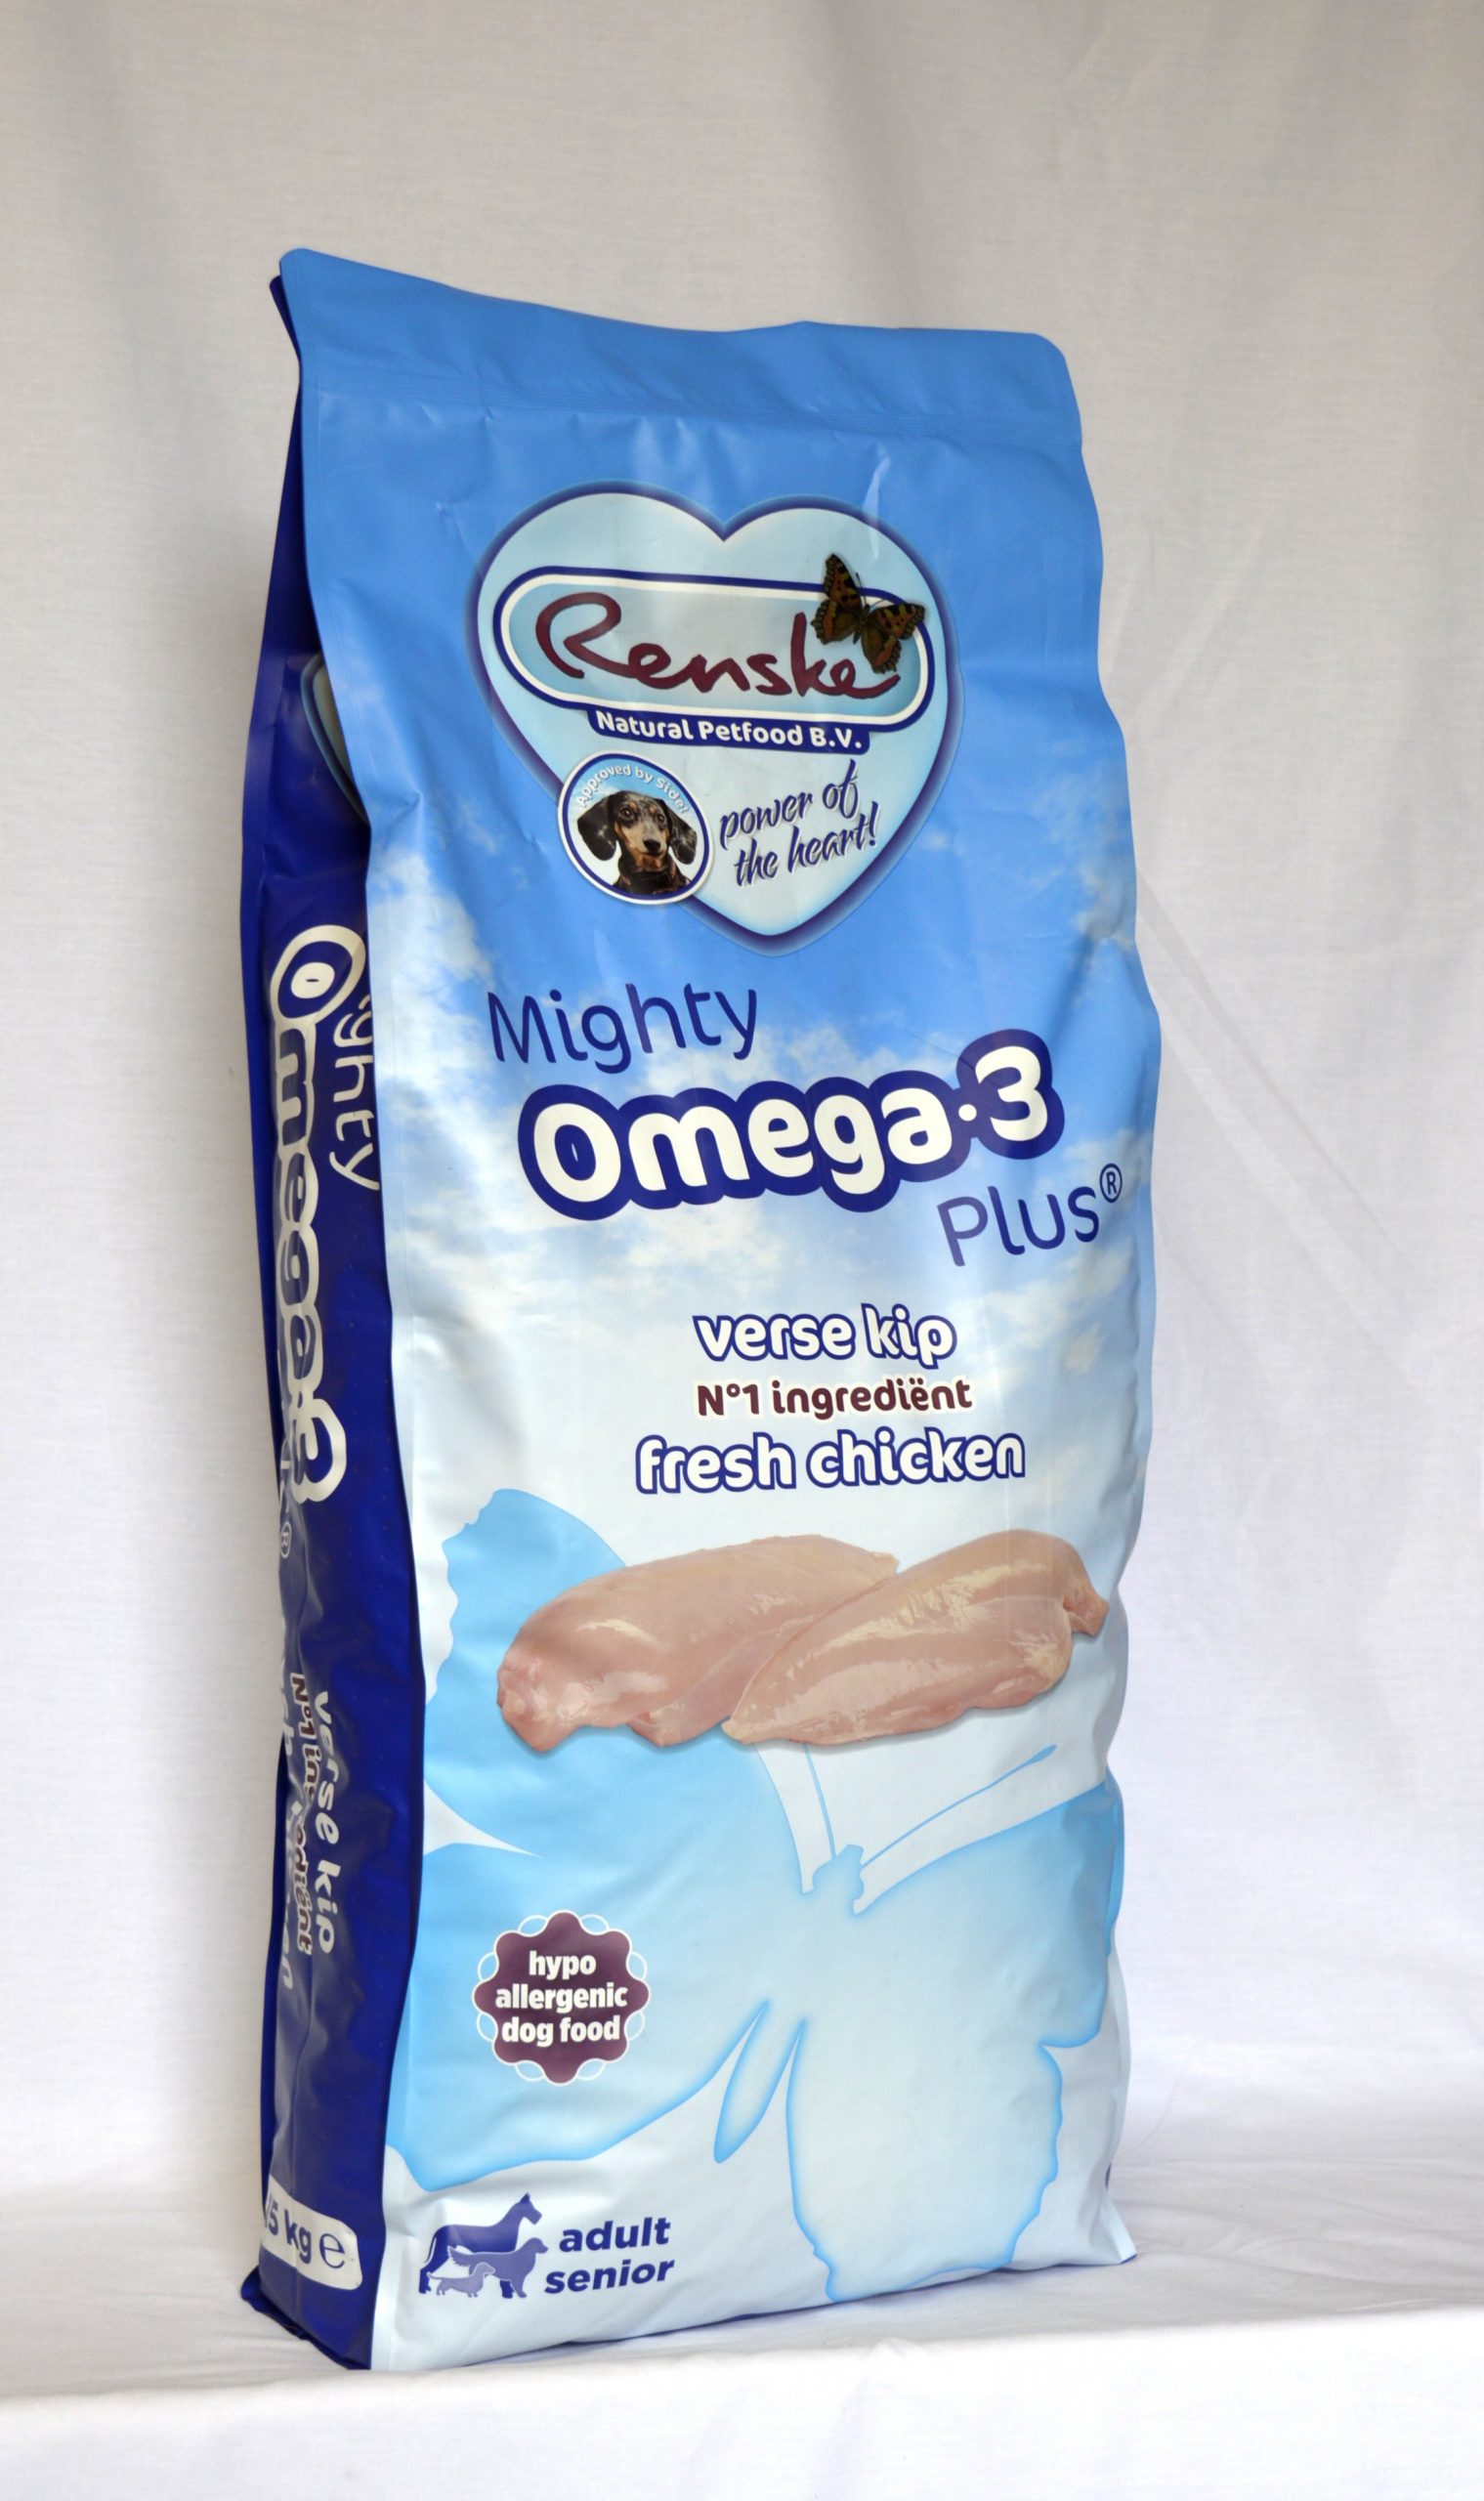 Renske Mighty Omega3 plus Fresh Chicken 12kg